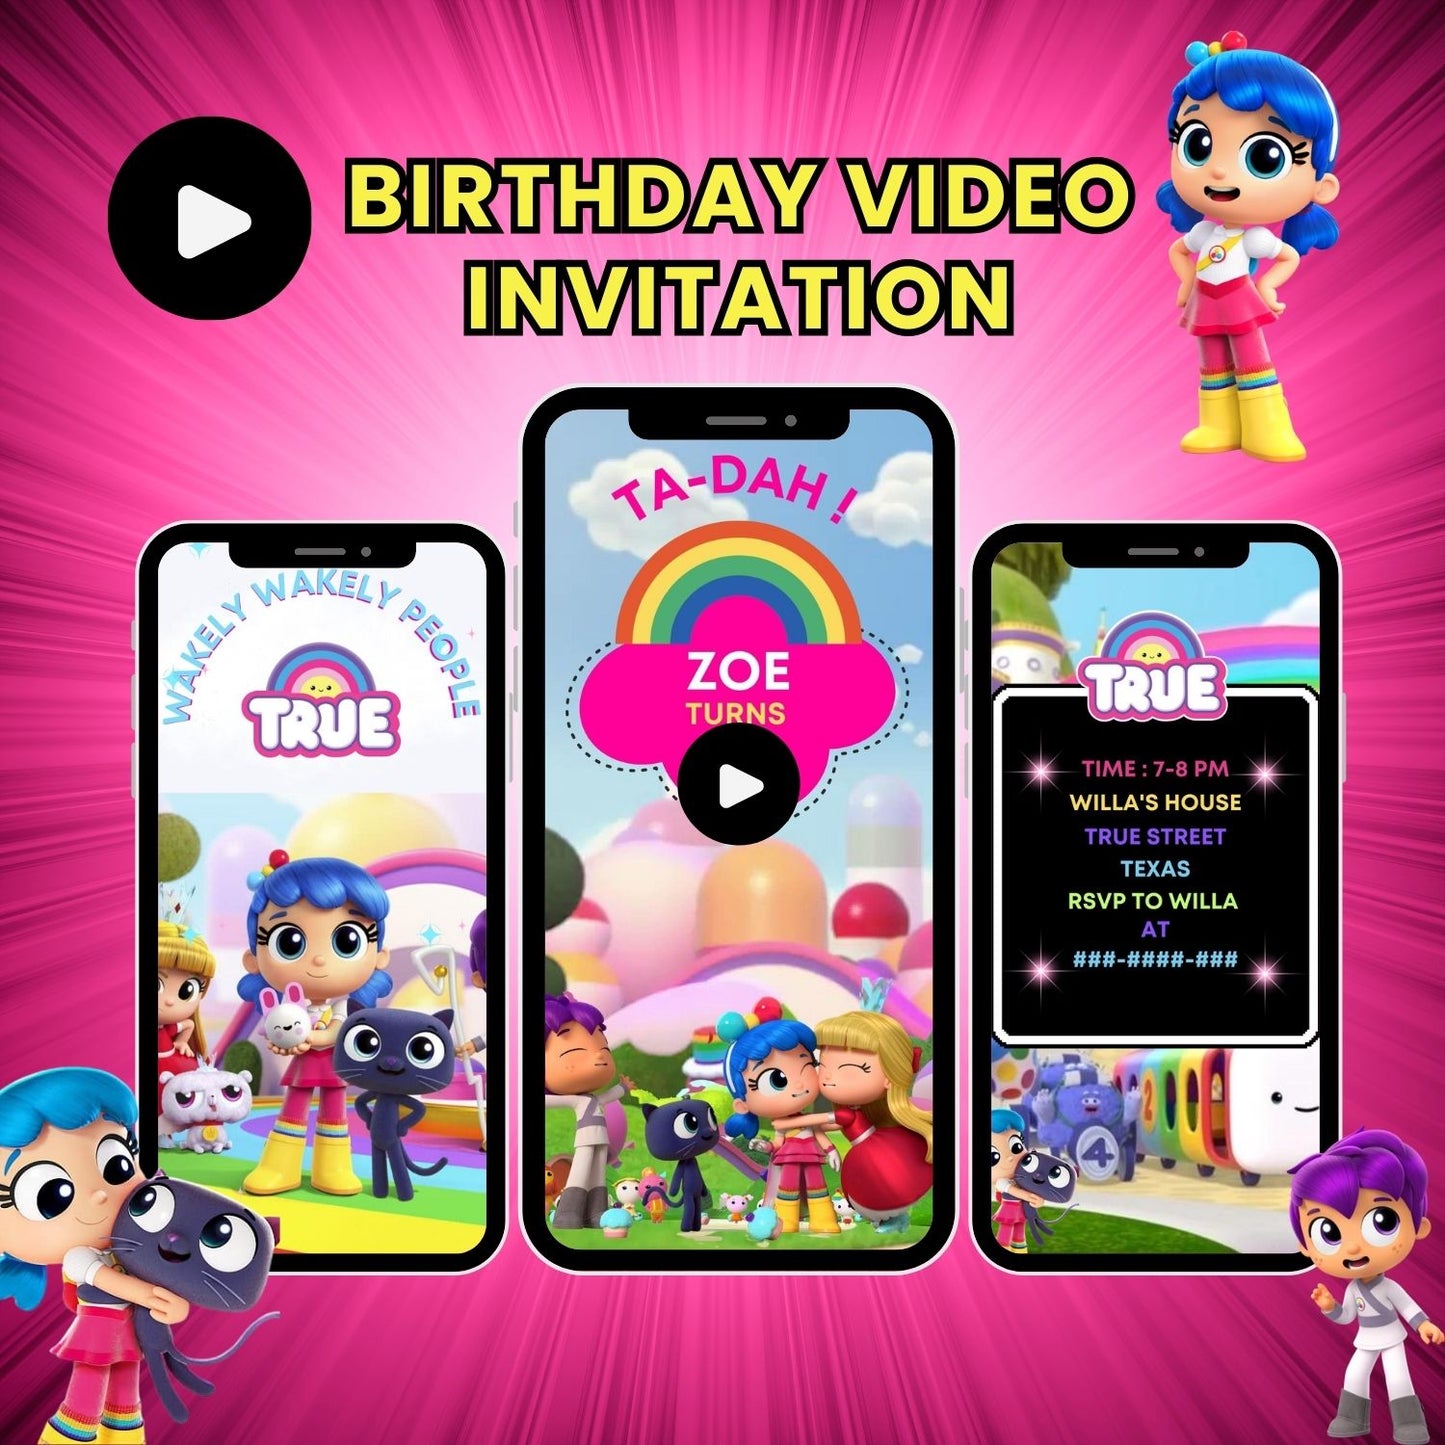 True and The Rainbow Kingdom Birthday Party Video Invitation | Animated & Customizable invite